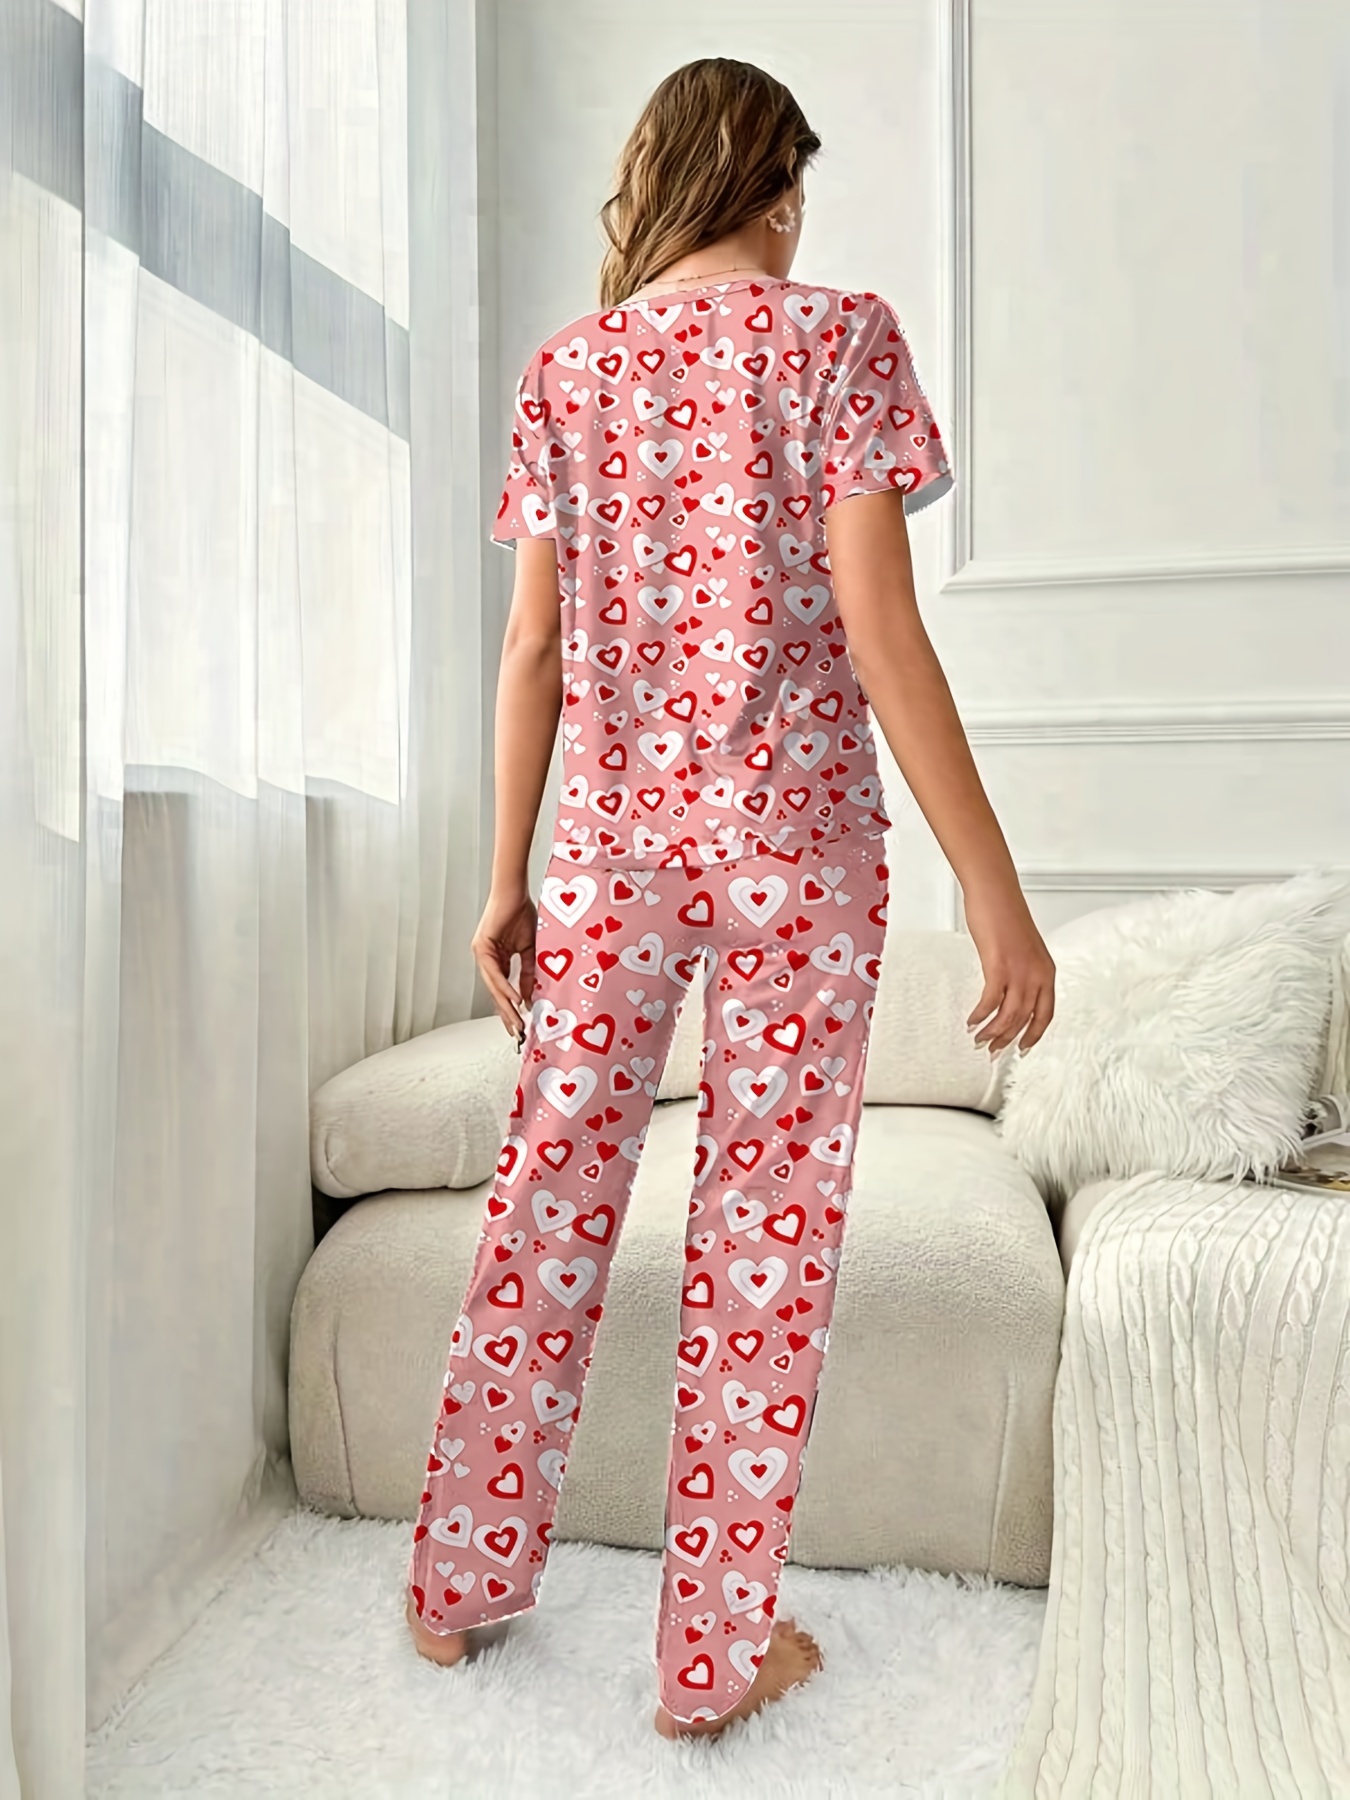 Women's Sleepwear Pjs Lounge Round Neck with Pants Nightwear Pajama Set